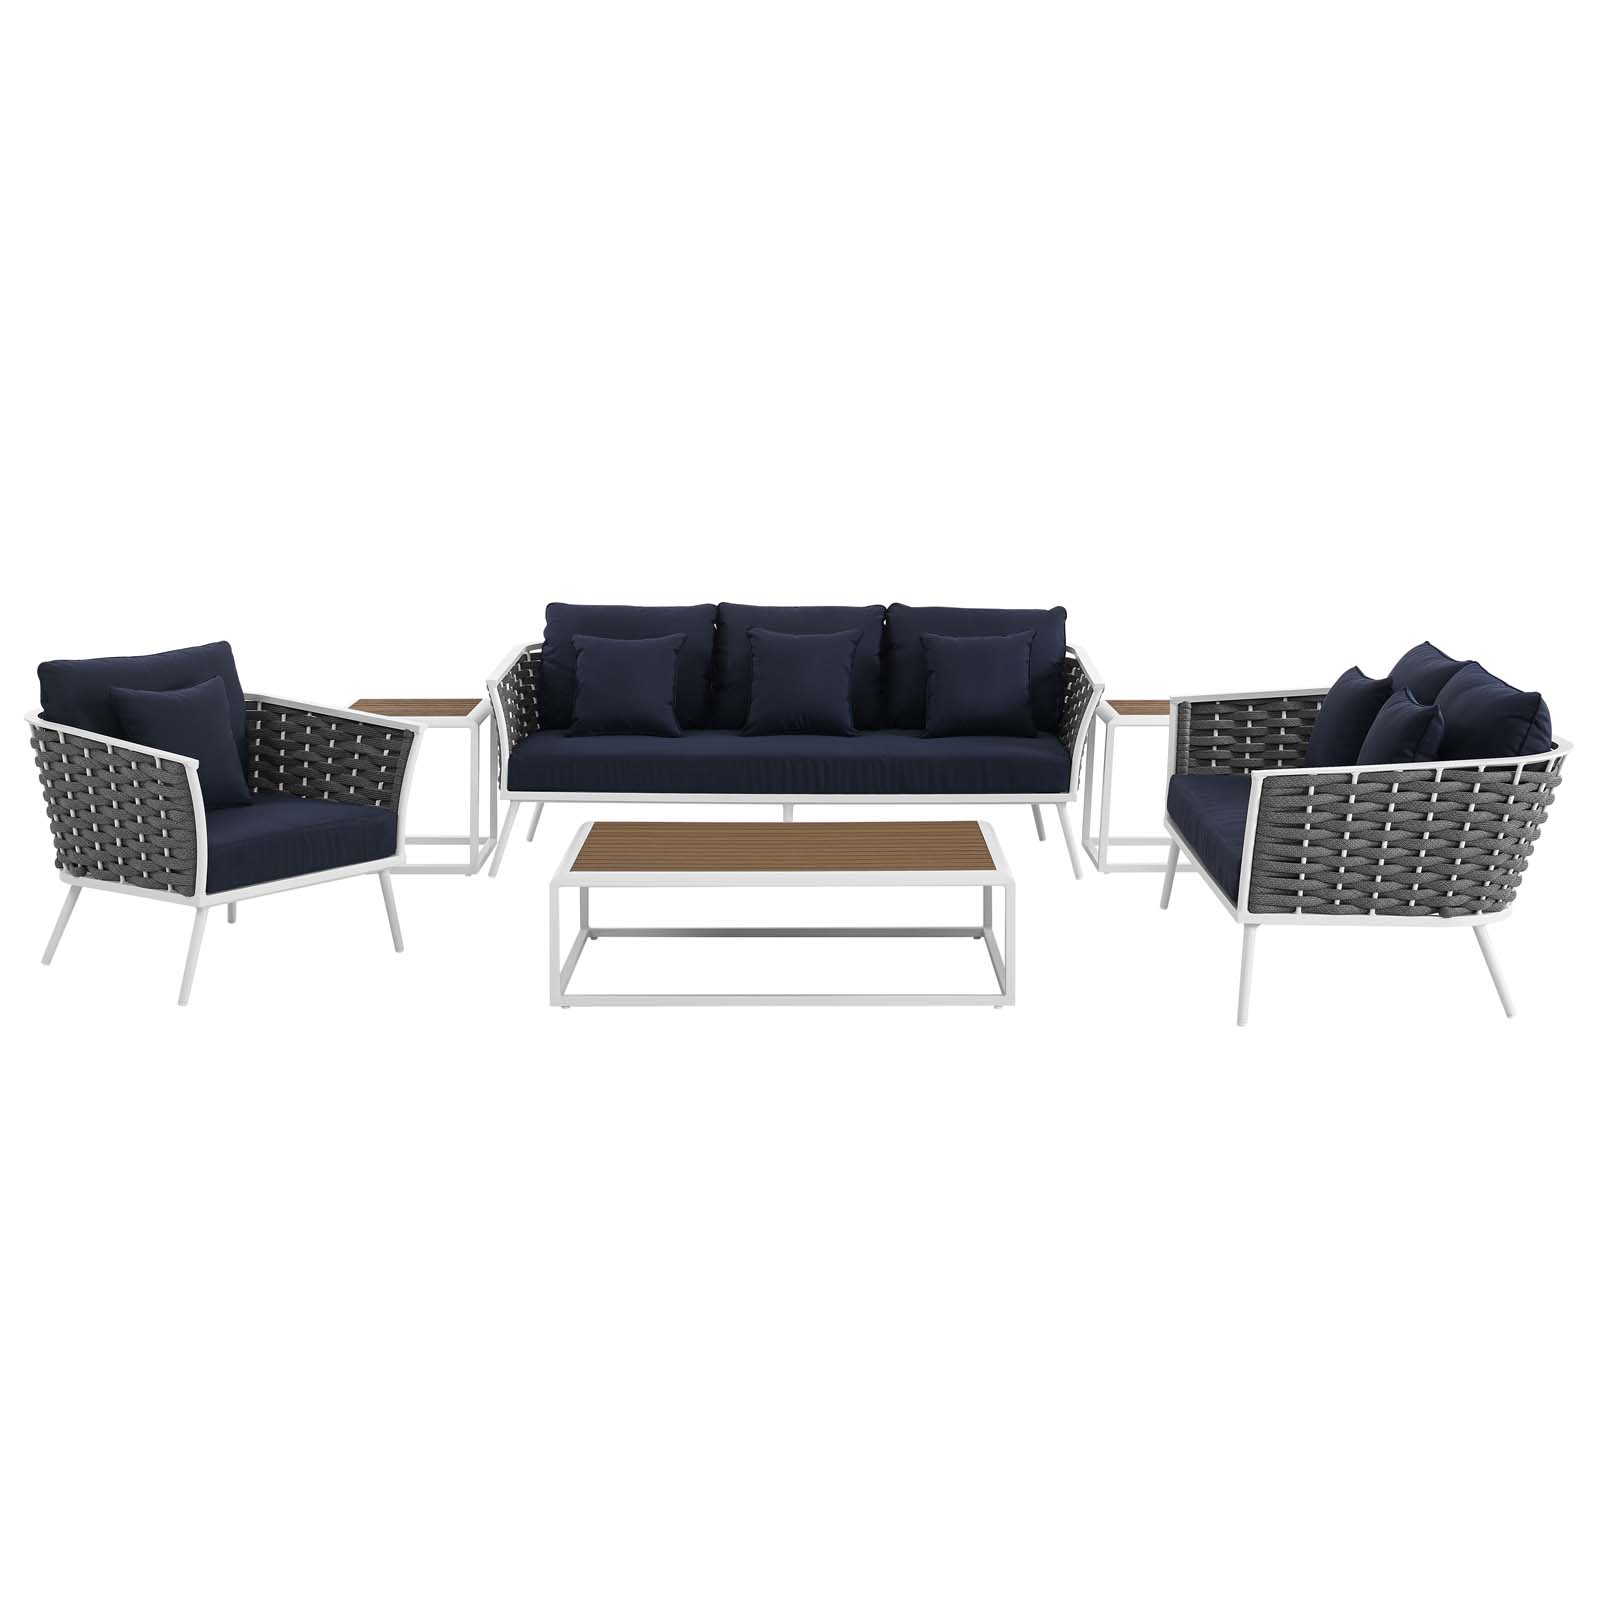 Modern Contemporary Urban Design Outdoor Patio Balcony Garden Furniture Lounge Chair, Sofa and Table Set, Fabric Aluminium, White Navy - image 4 of 8